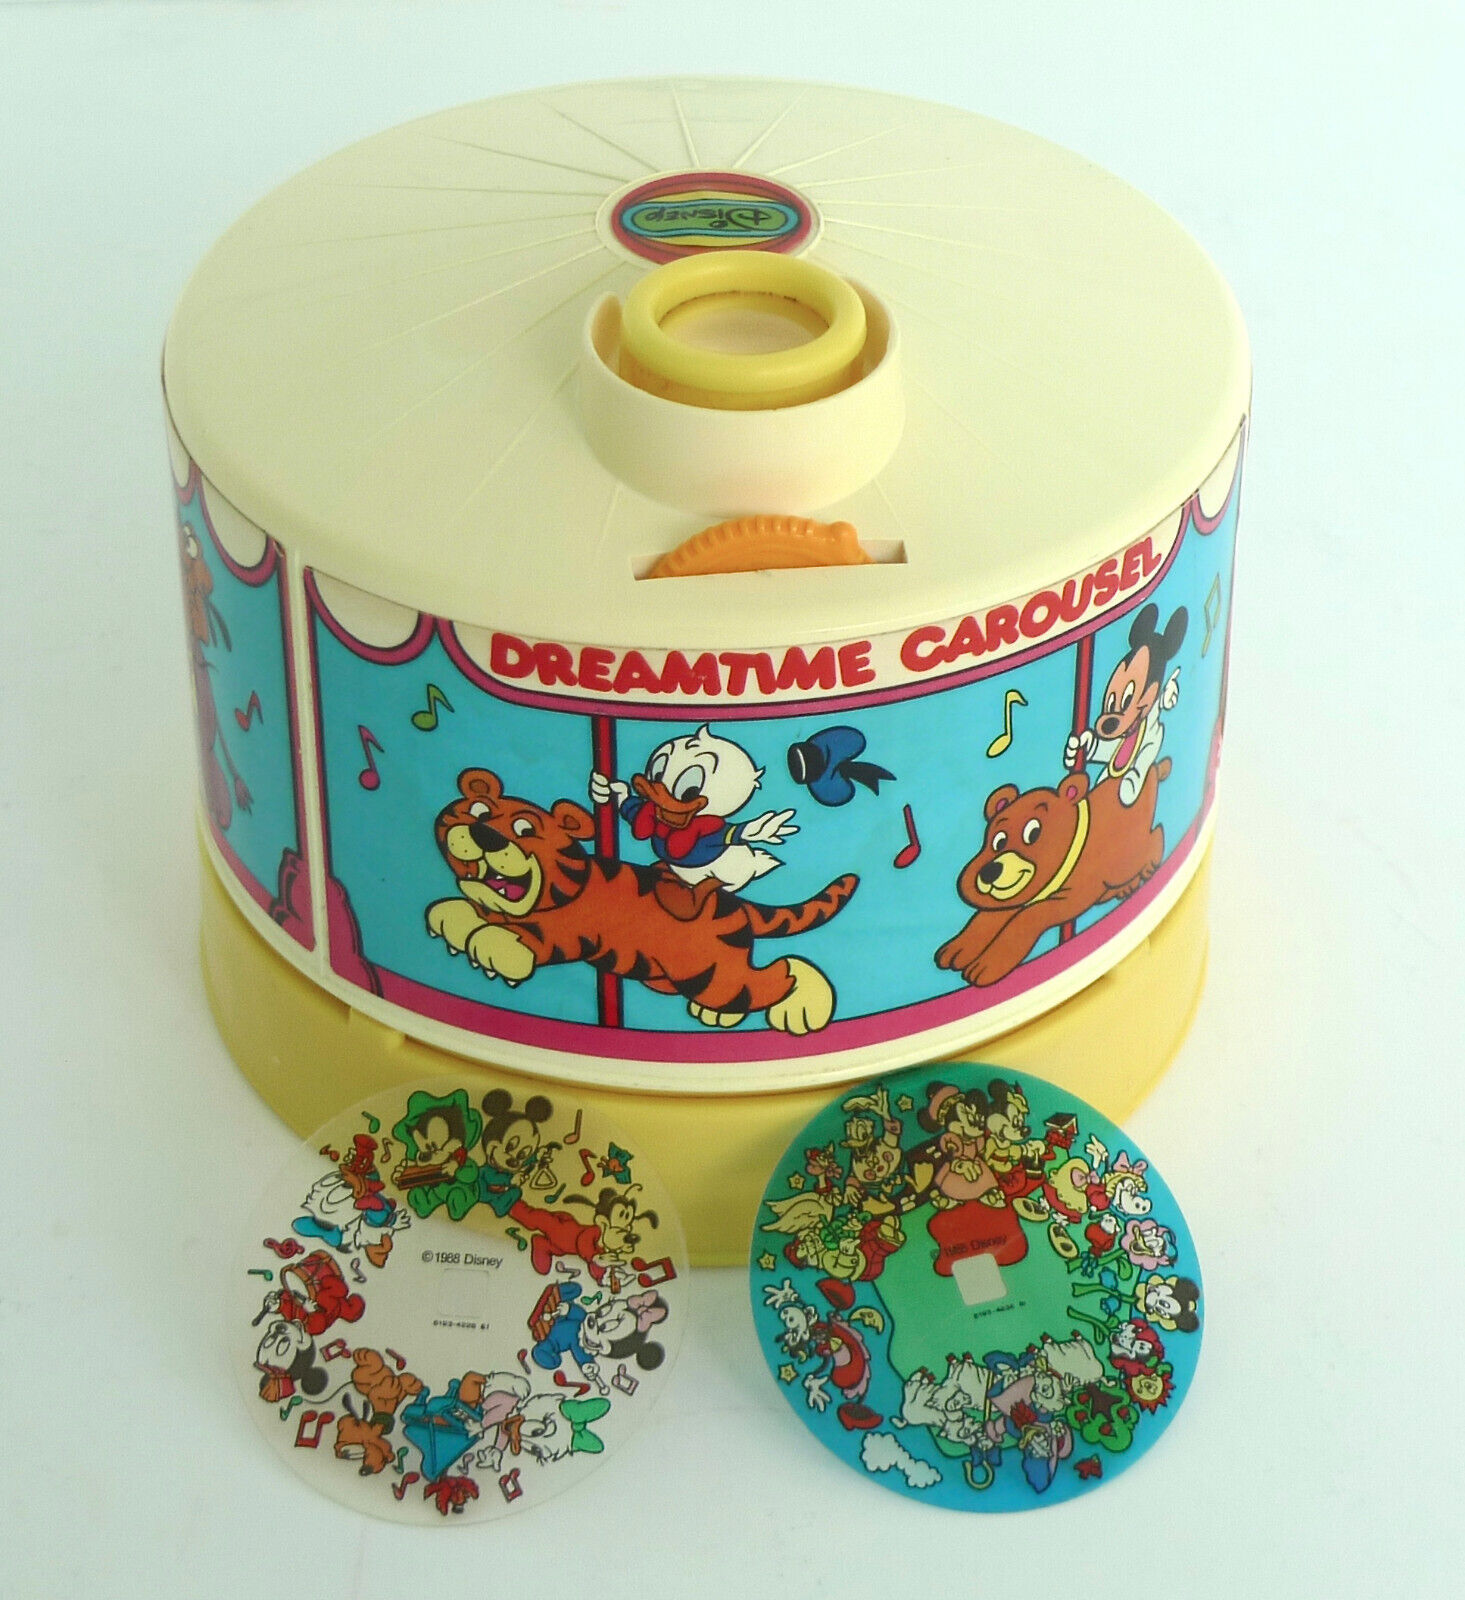 Vintage 1980s Walt Disney Dreamtime Carousel motion projector music box- works